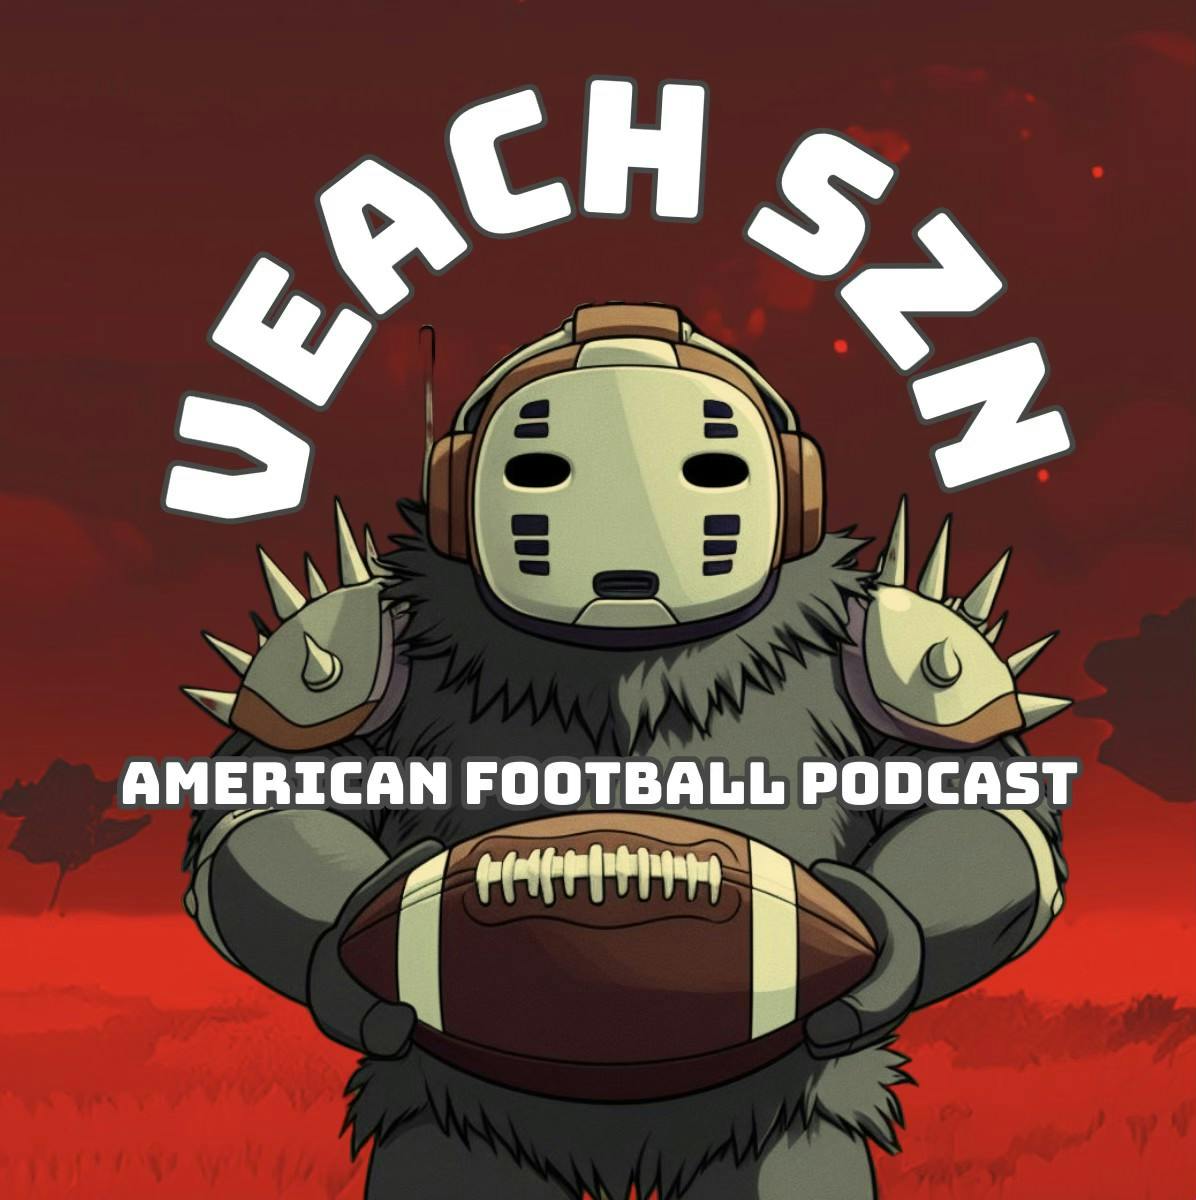 Veach Season - Chiefs rookie minicamp, latest Chiefs headlines, & remaining cap space